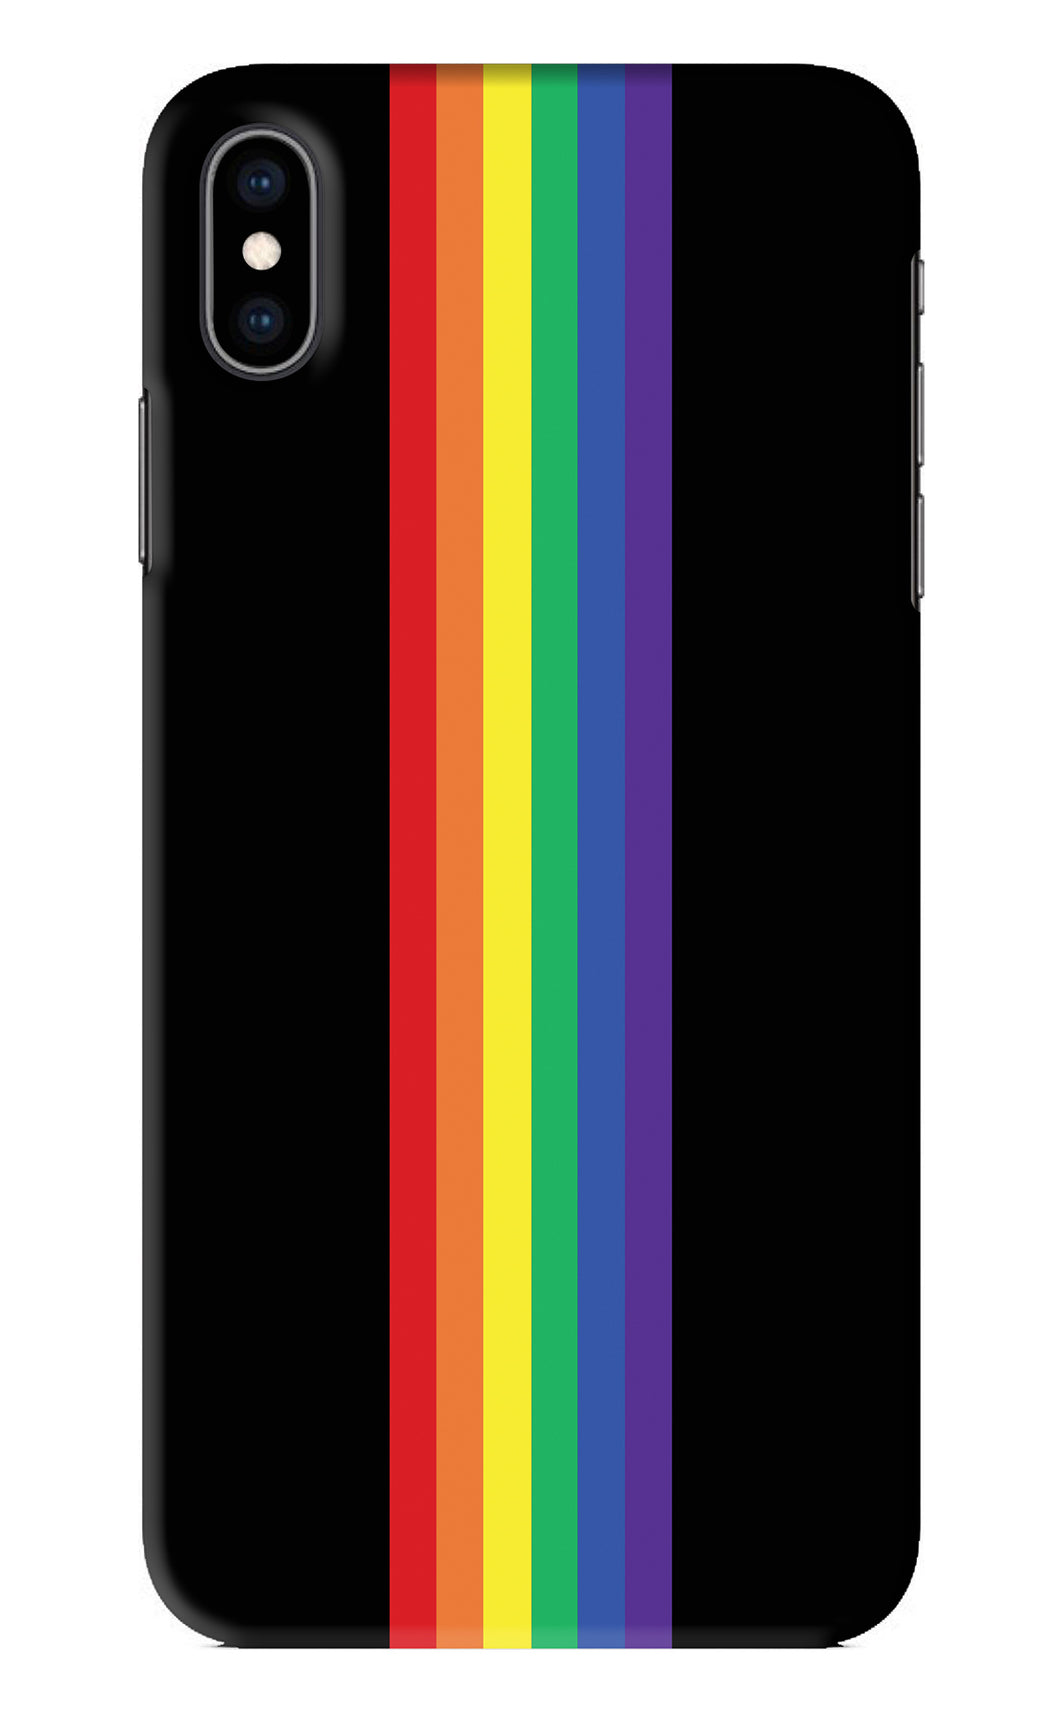 Pride iPhone XS Max Back Skin Wrap